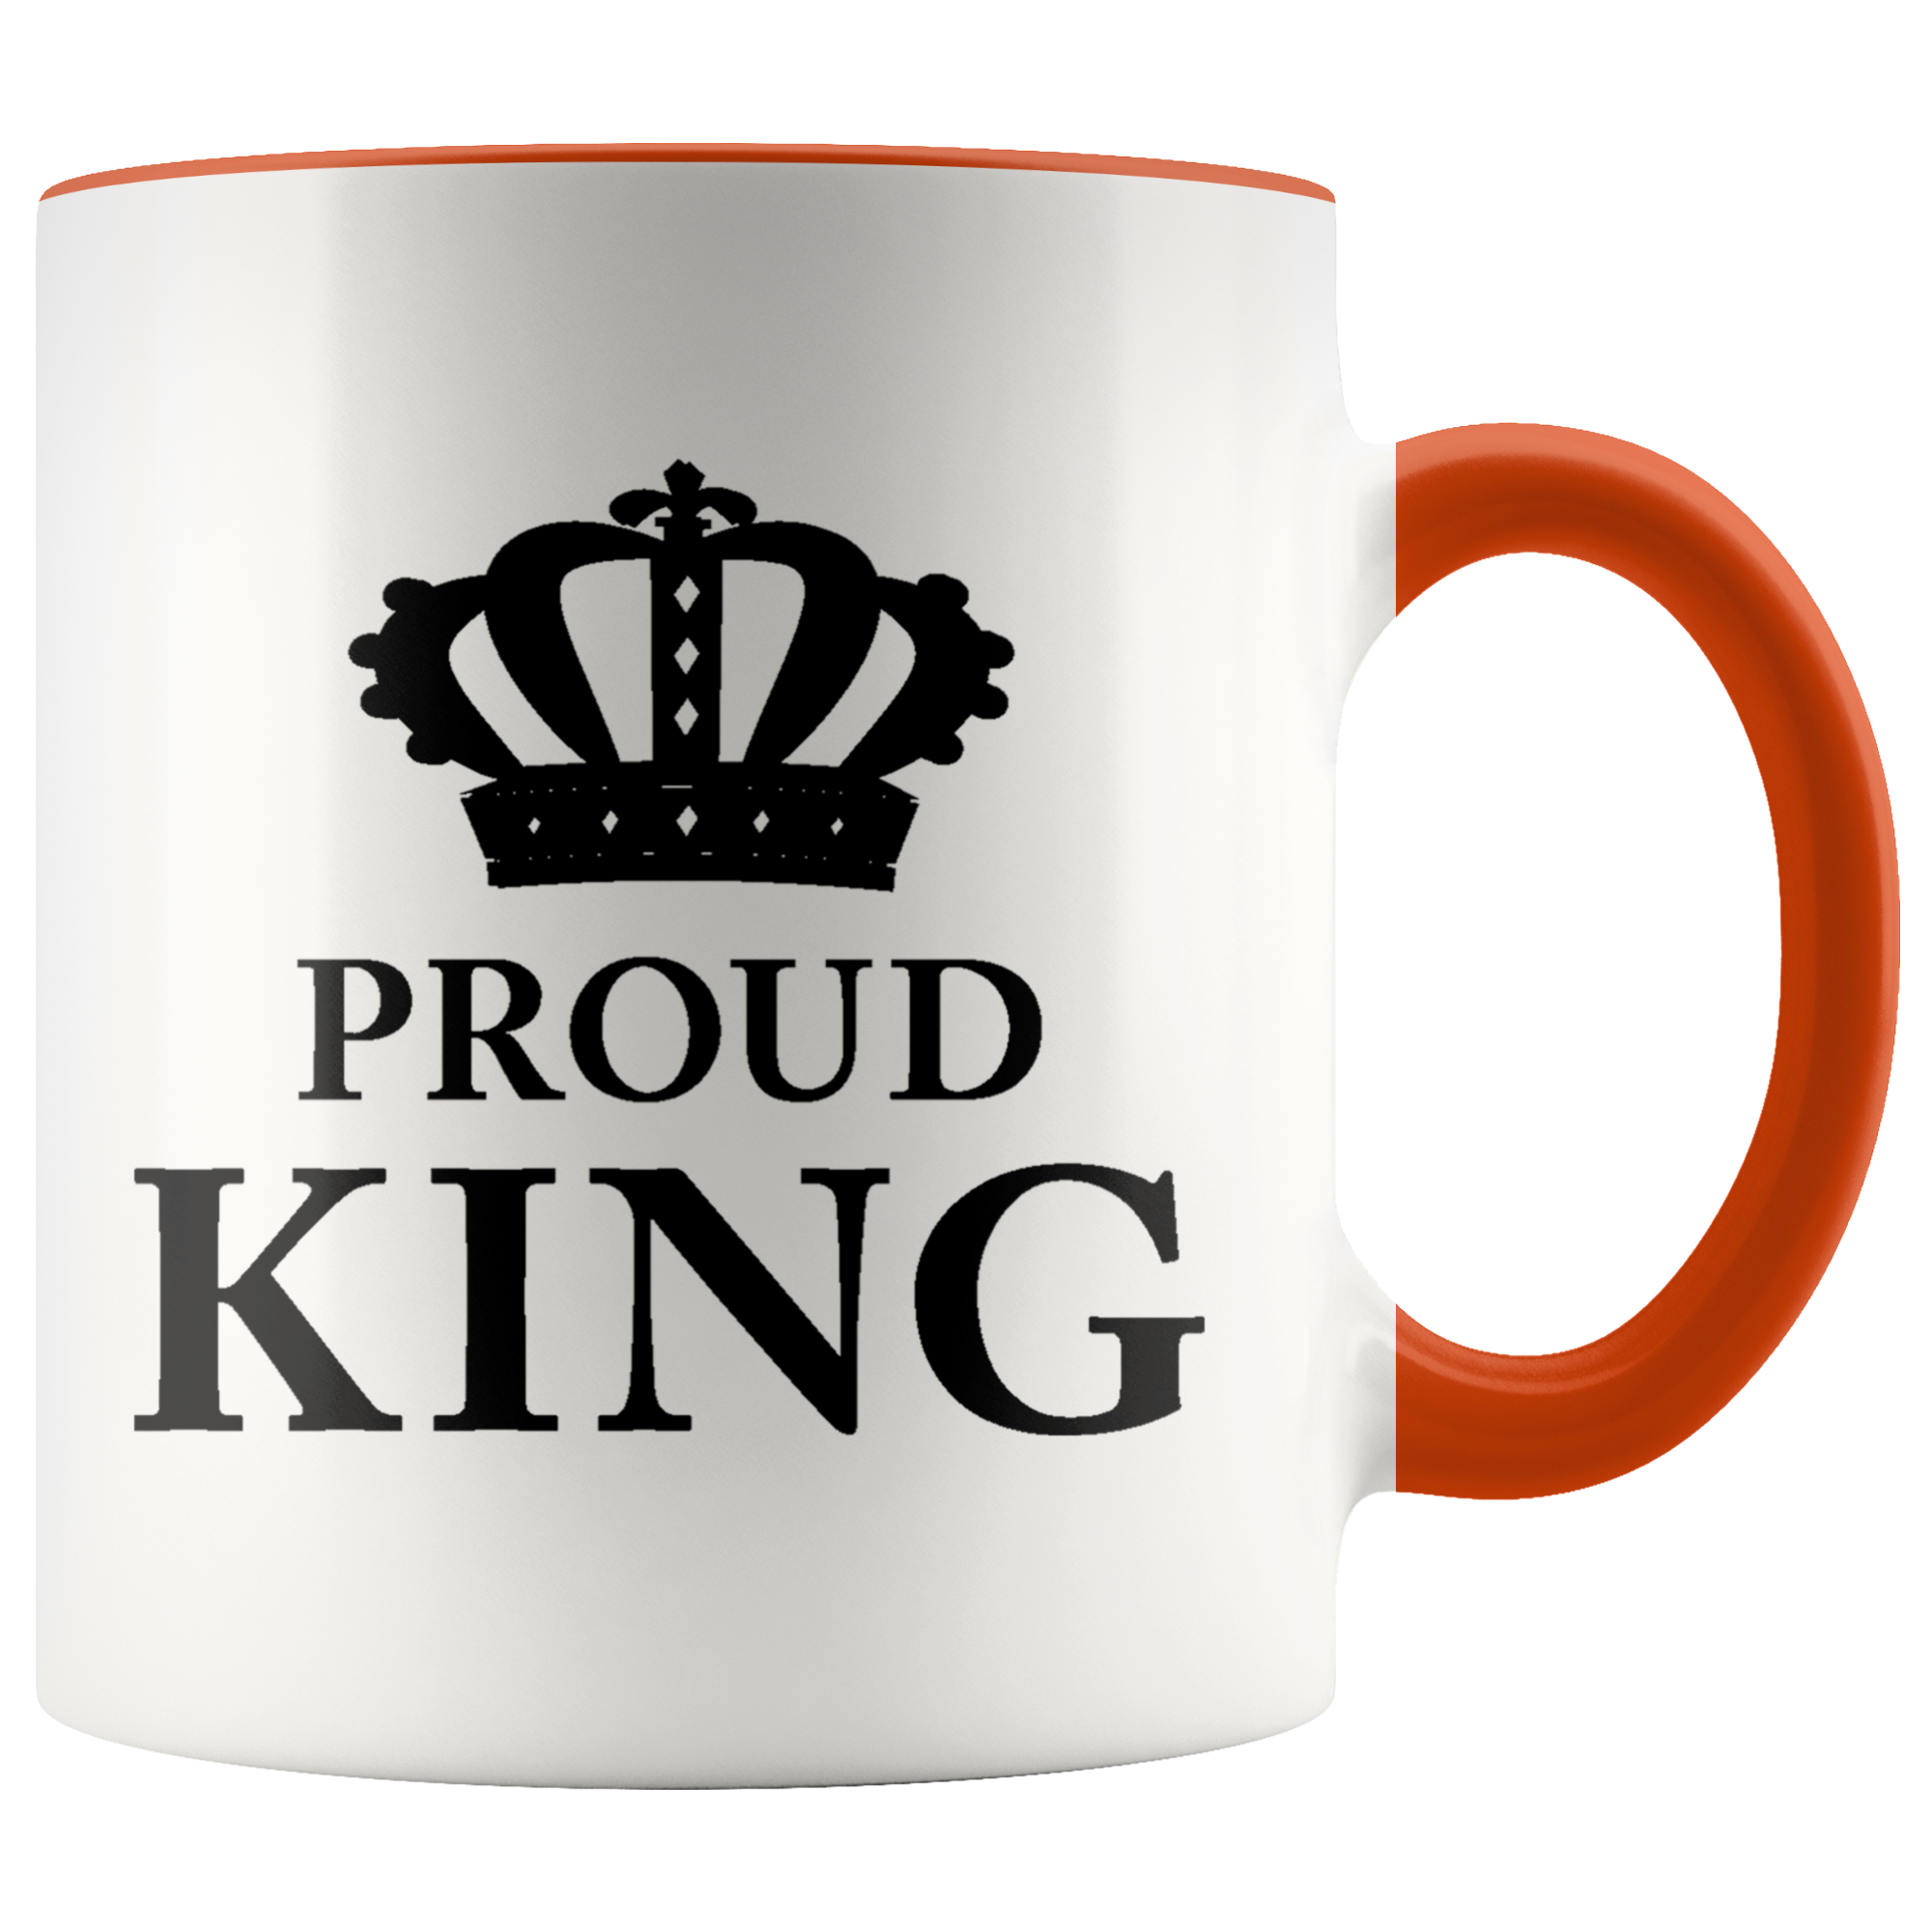 Proud King - Accent Mug (black)